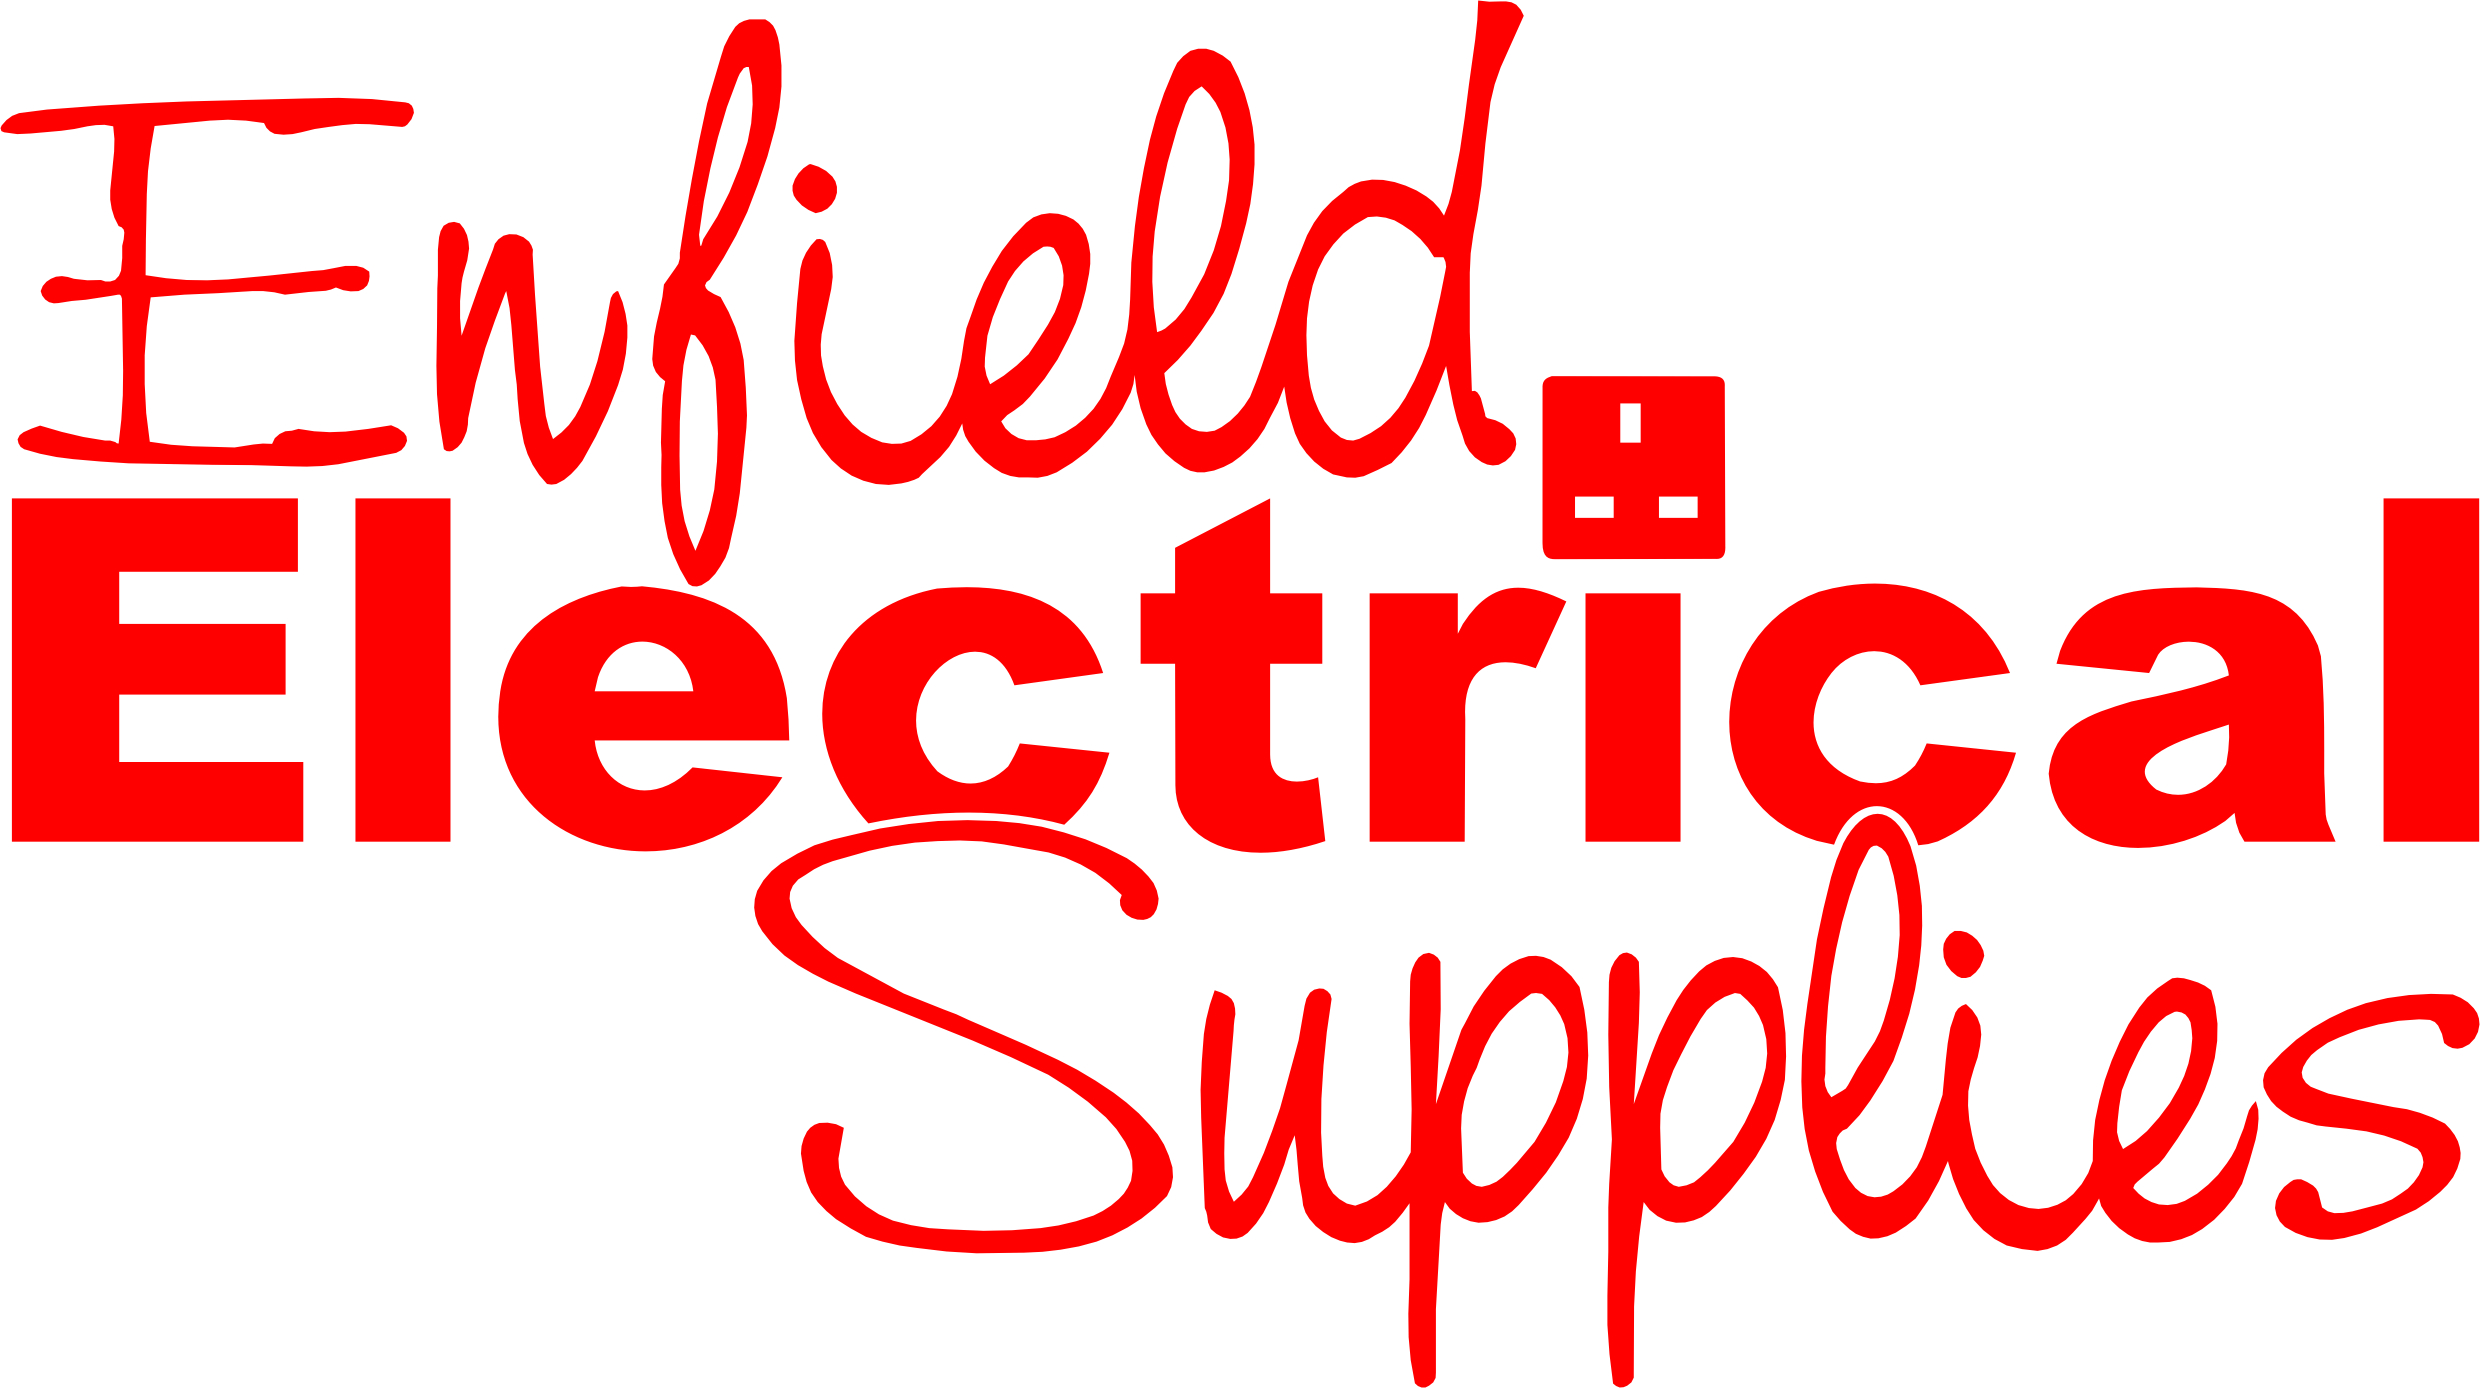 Enfield Electrical Supplies Ltd